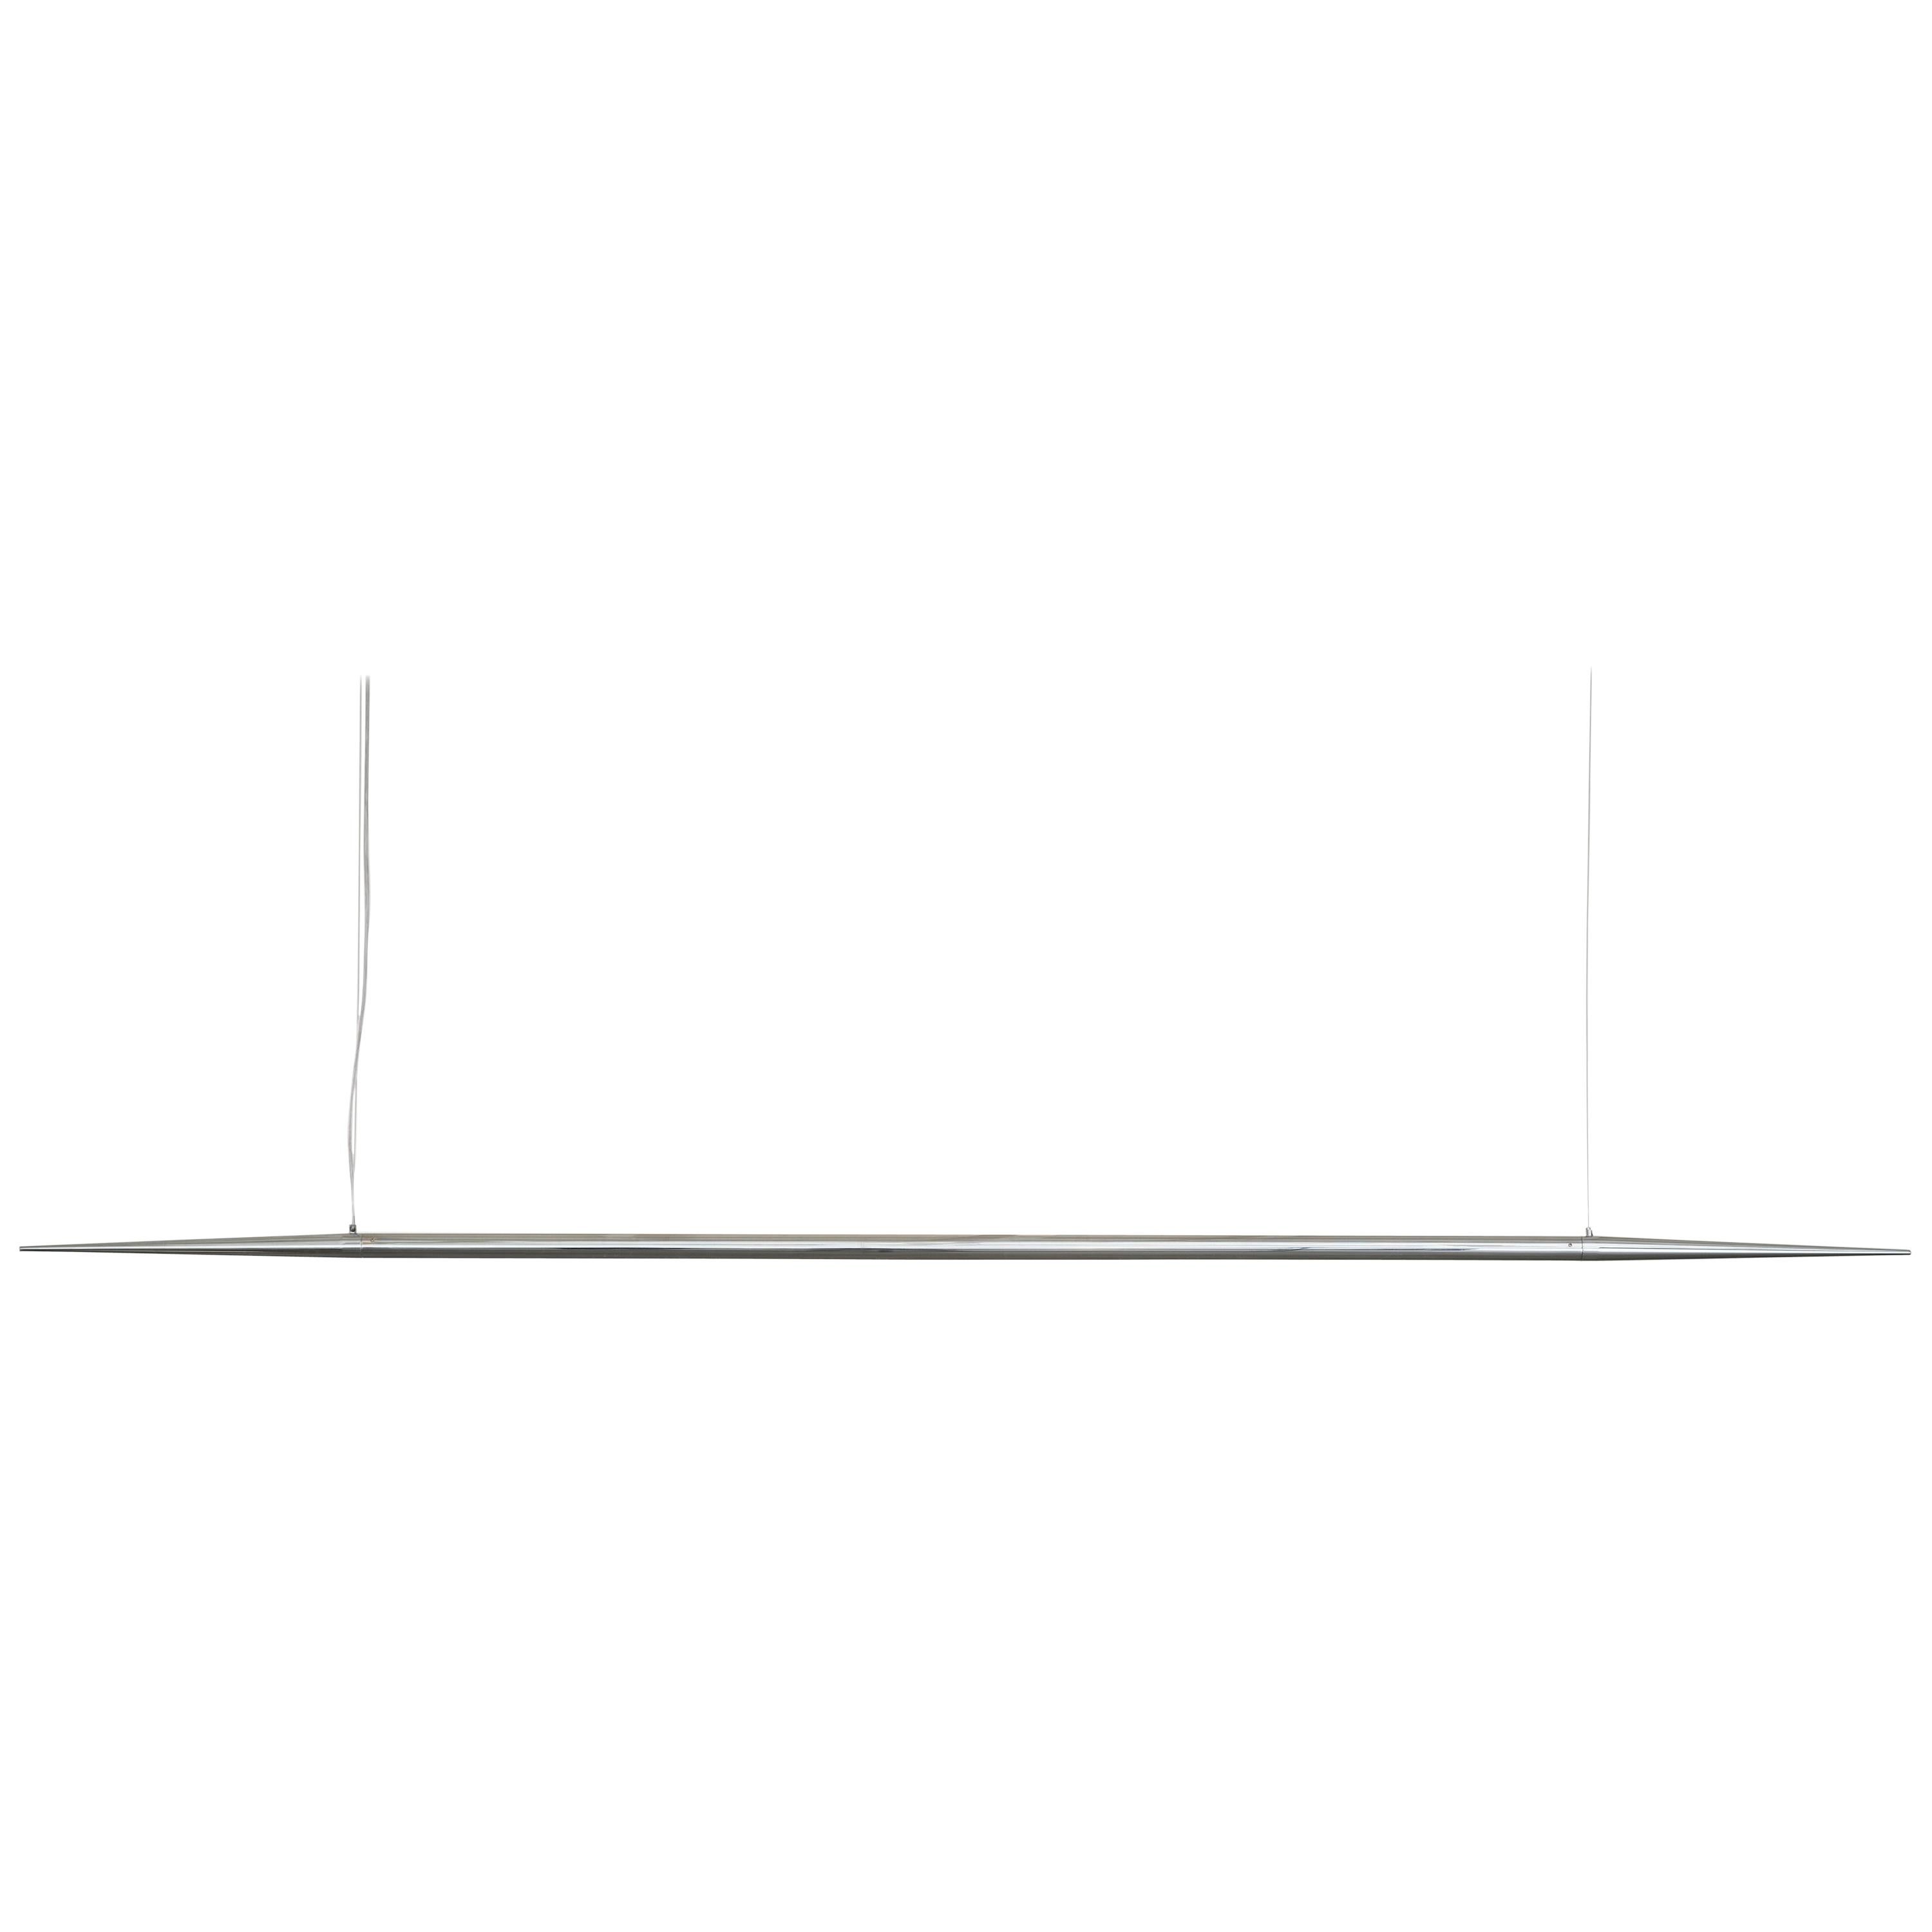 Ferrão Pendant Lamp, by Rain, Contemporary Lamp, Aluminium, Chrome